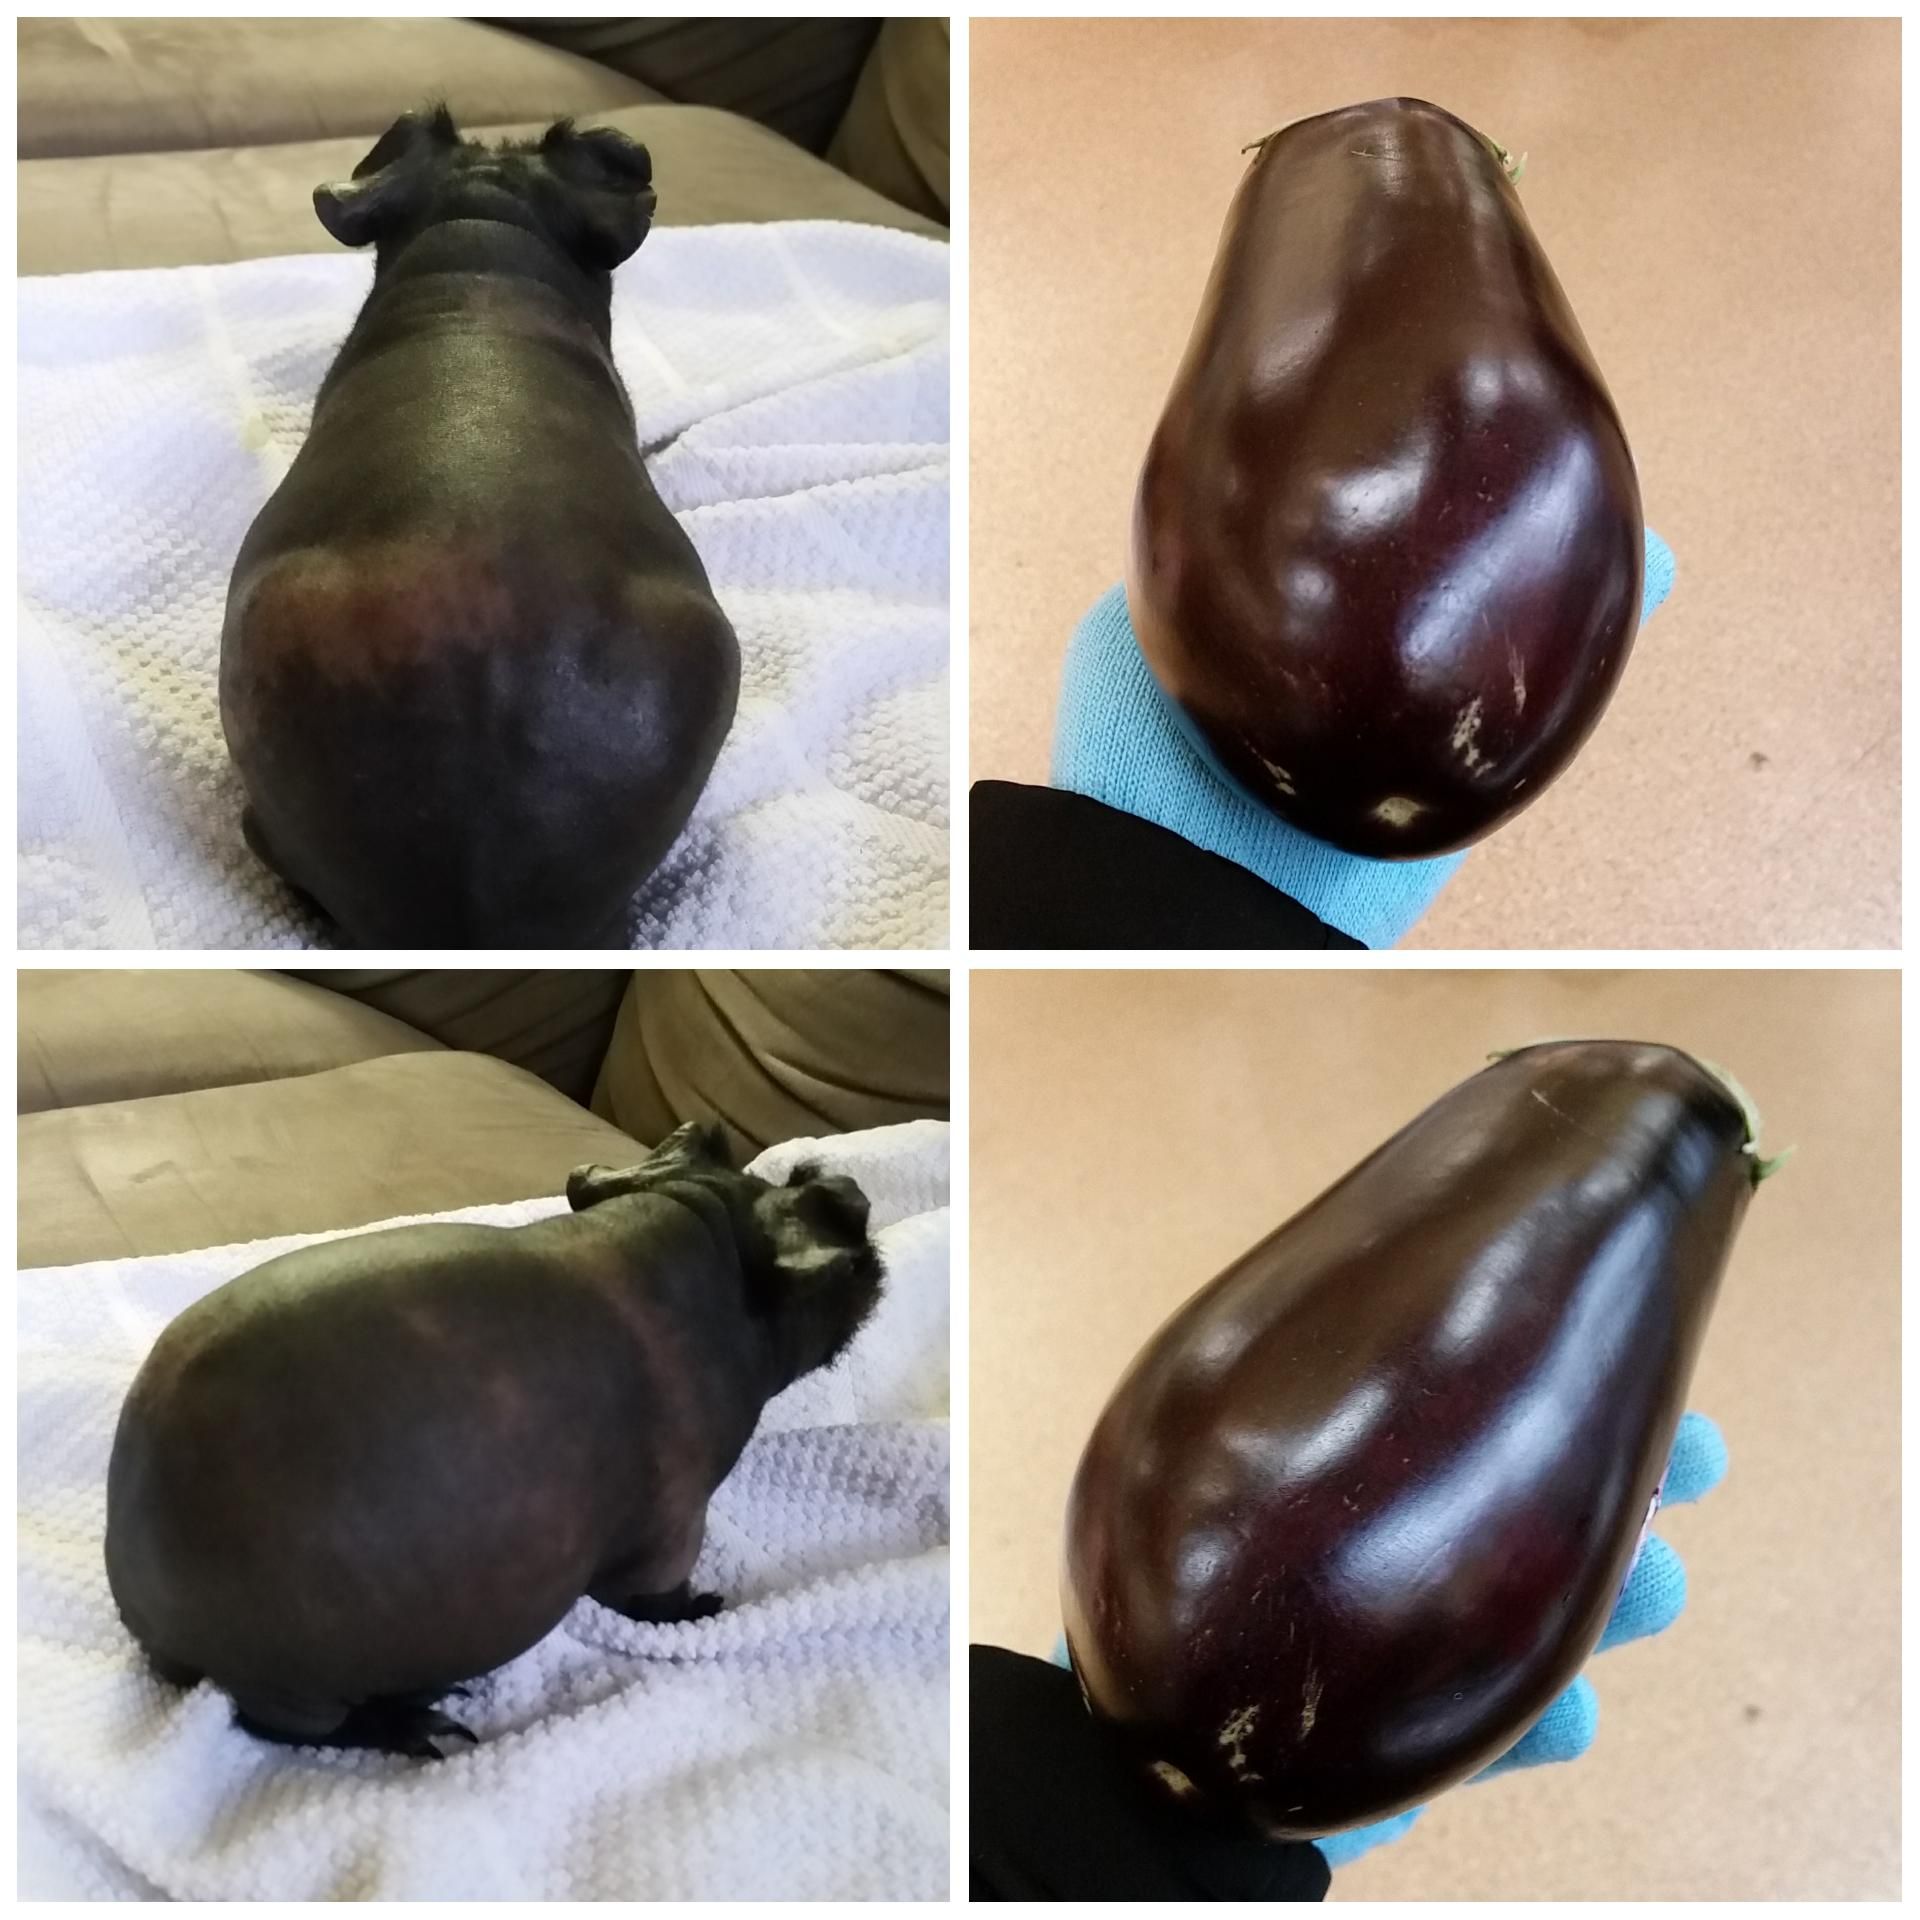 My hairless guinea pig totally looks like an eggplant